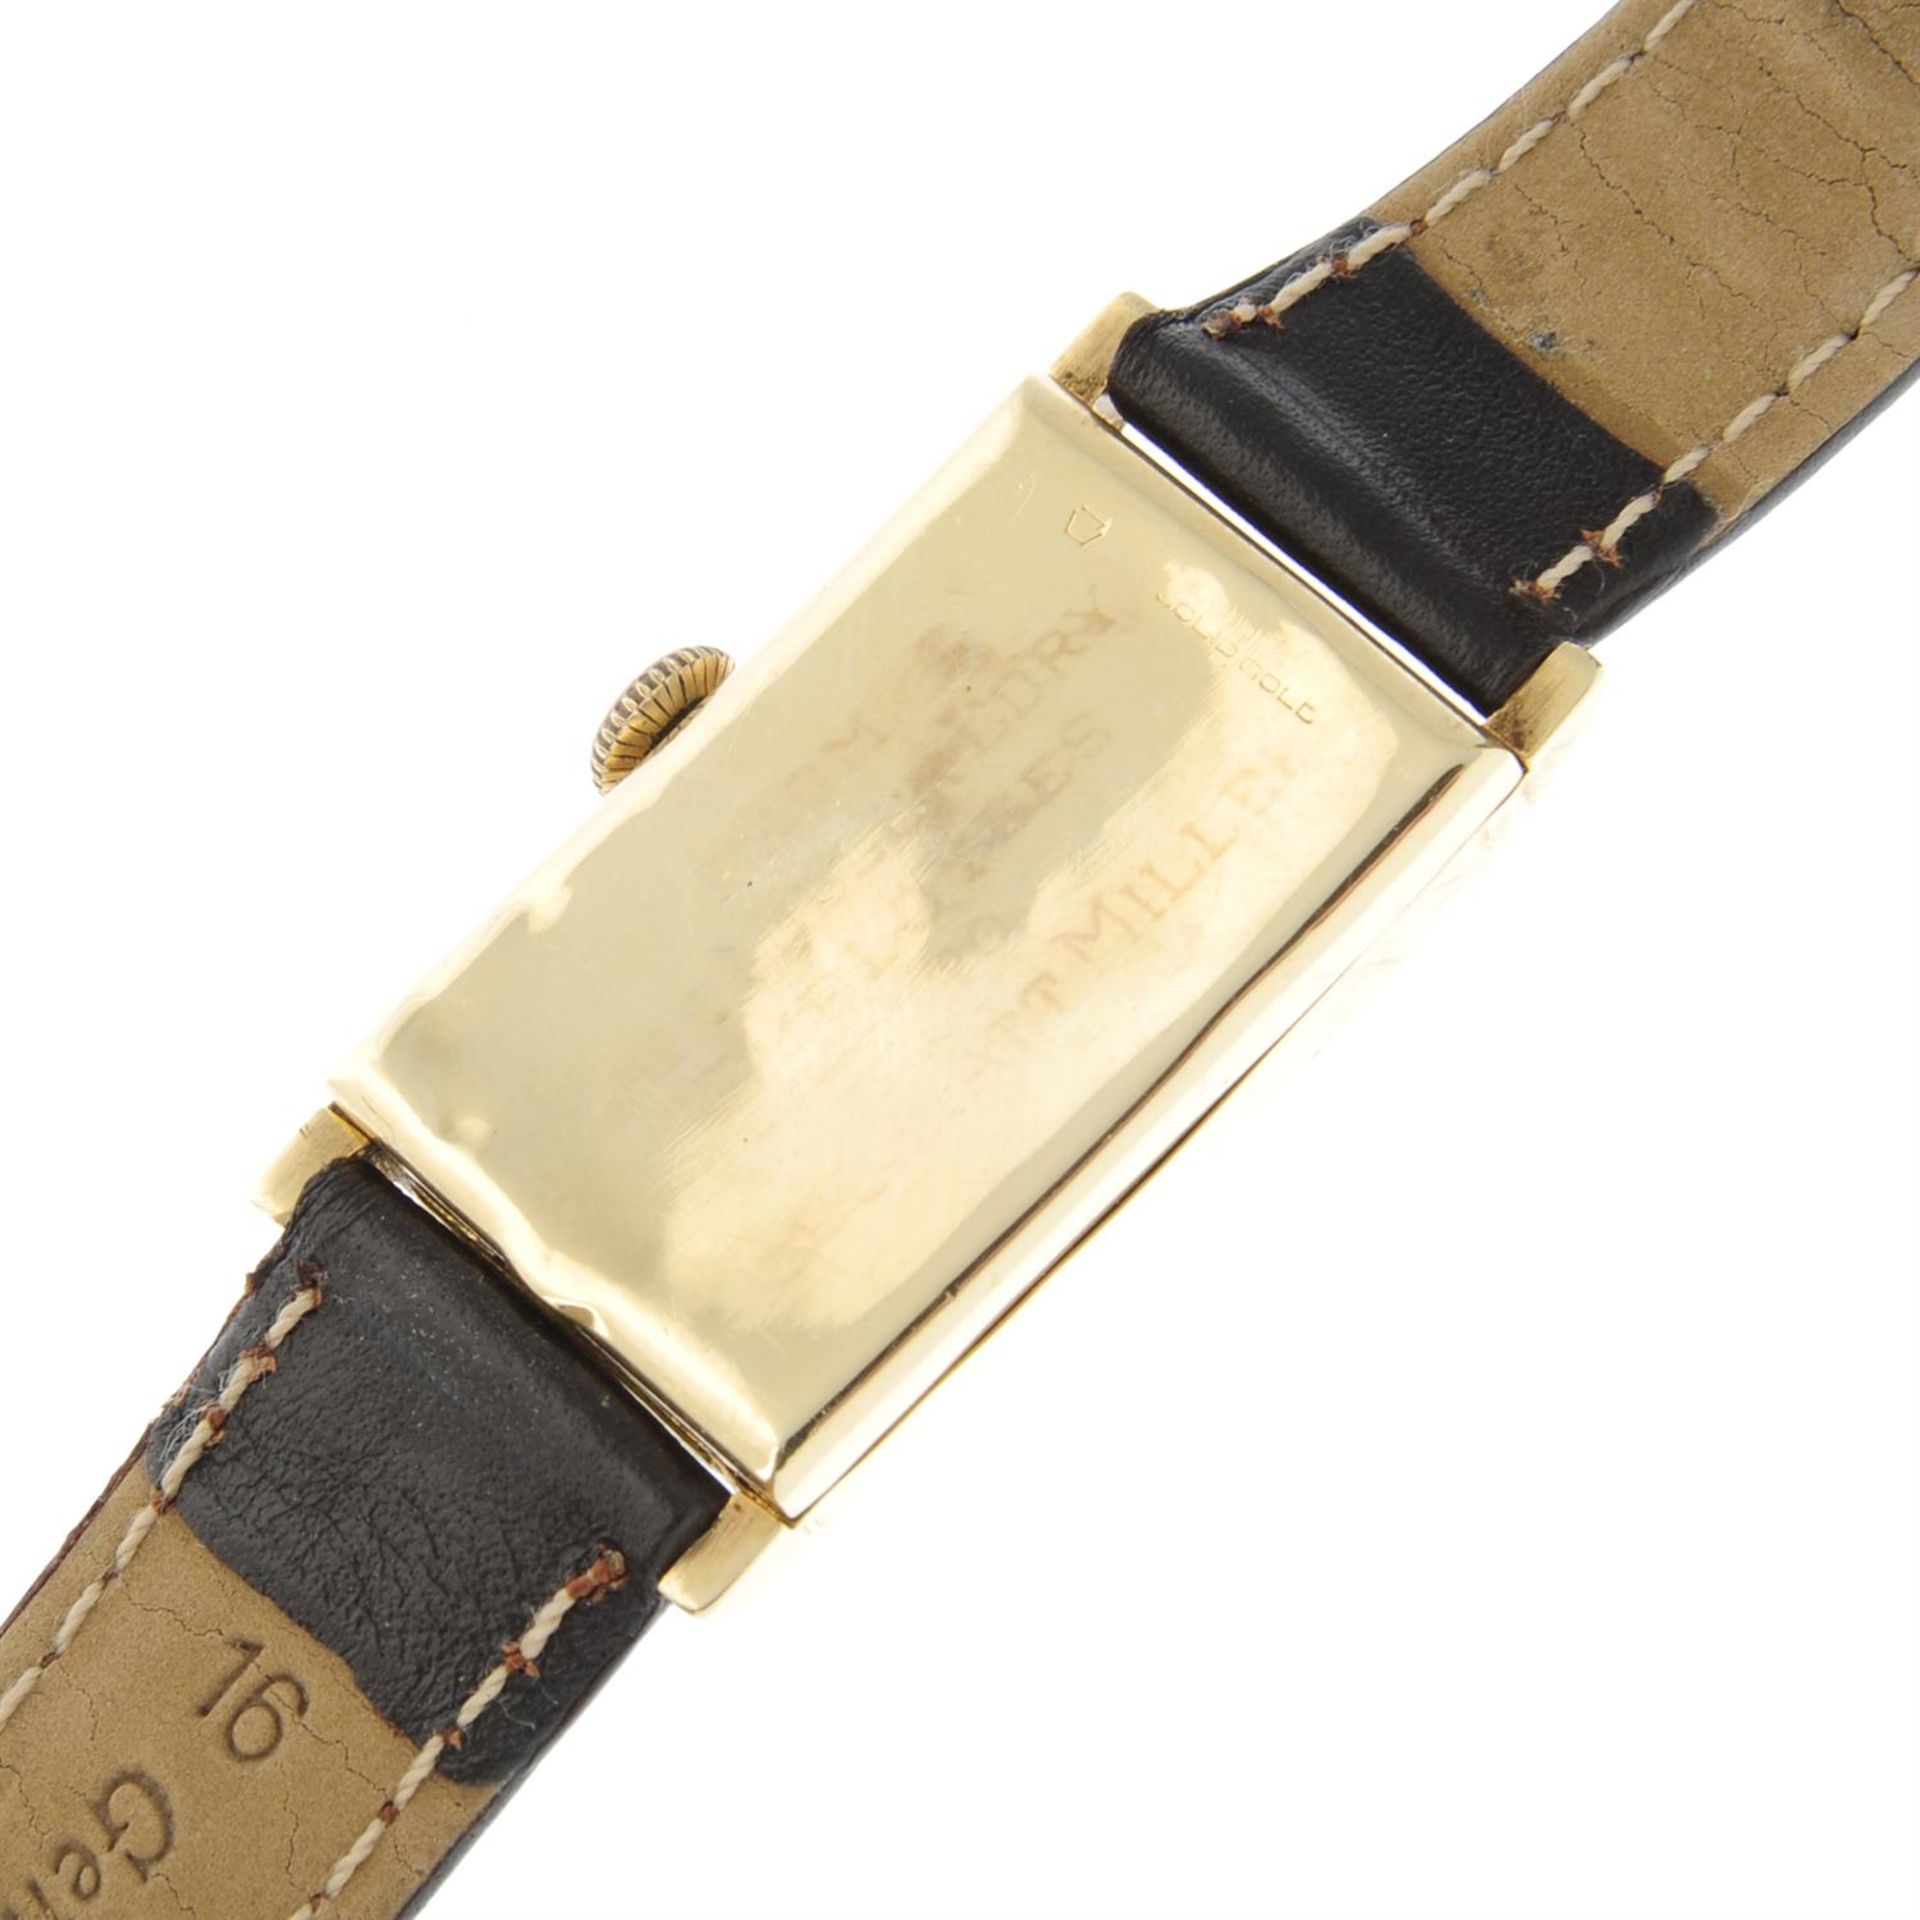 WALTHAM - a yellow metal wrist watch, 20x29mm. - Image 4 of 4